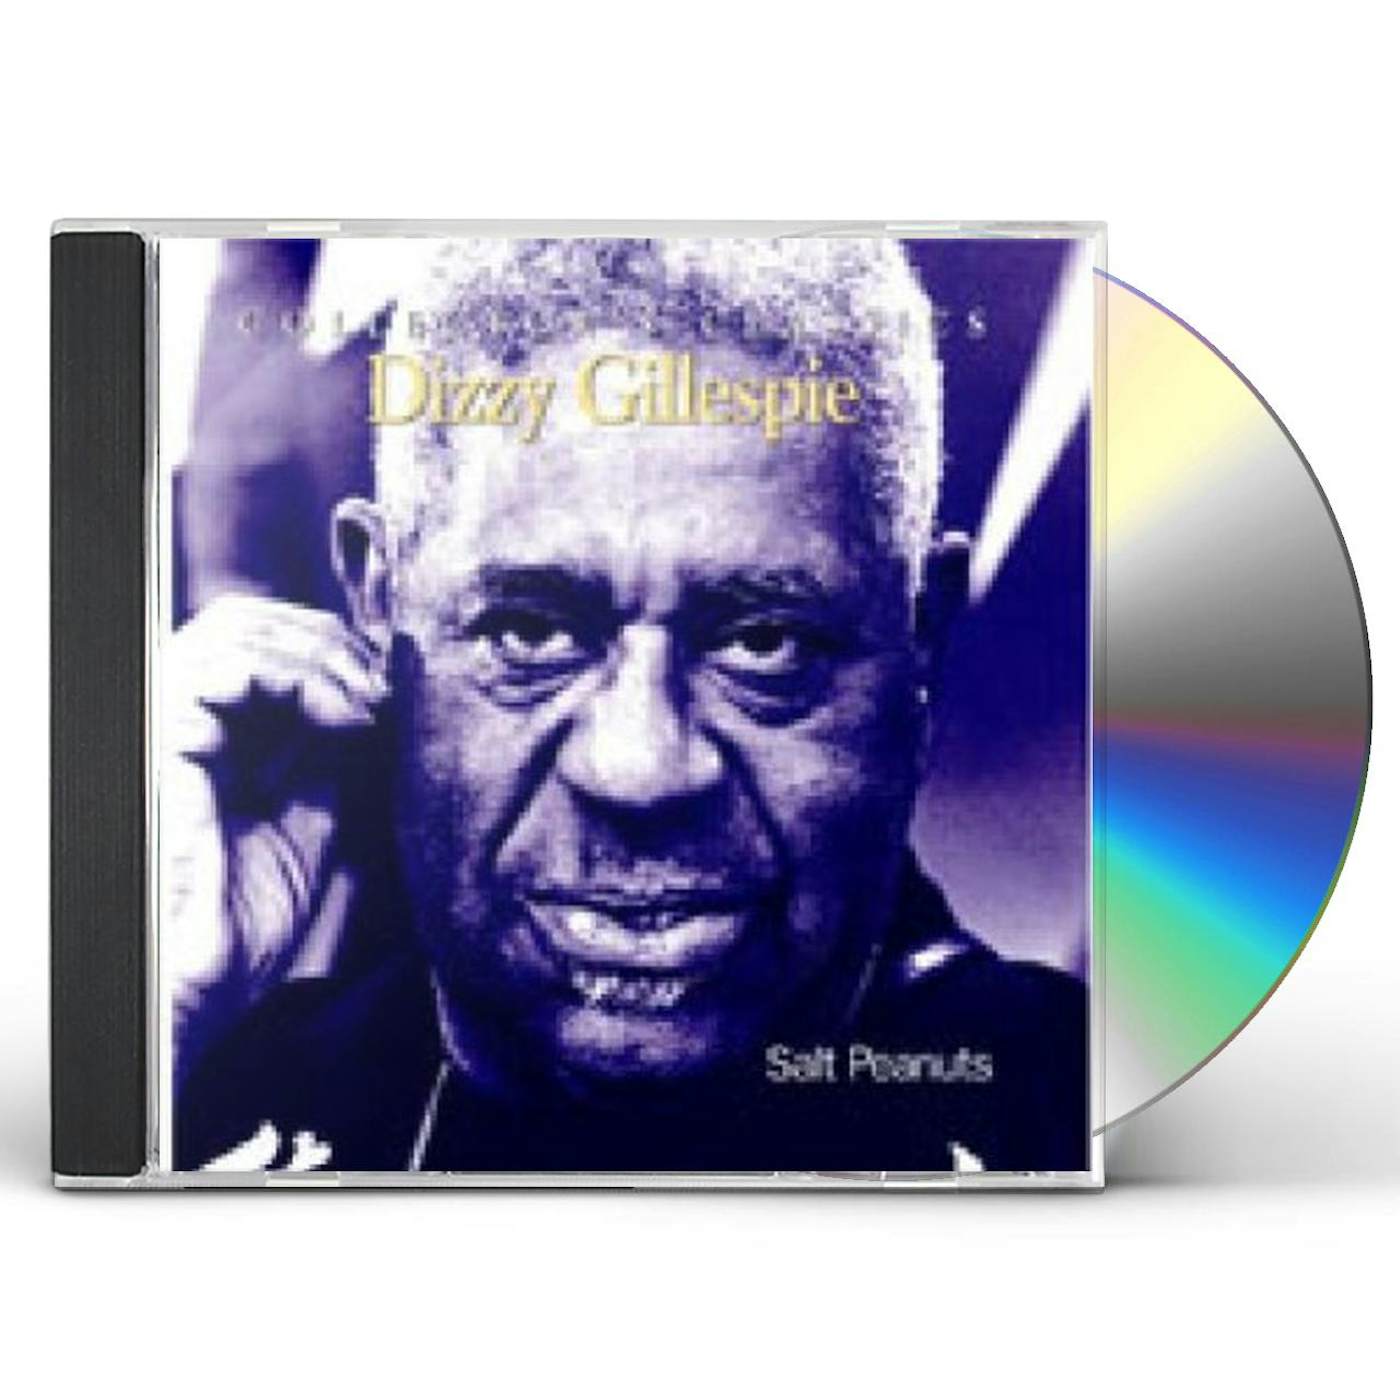 Dizzy Gillespie SALT PEANUTS CD